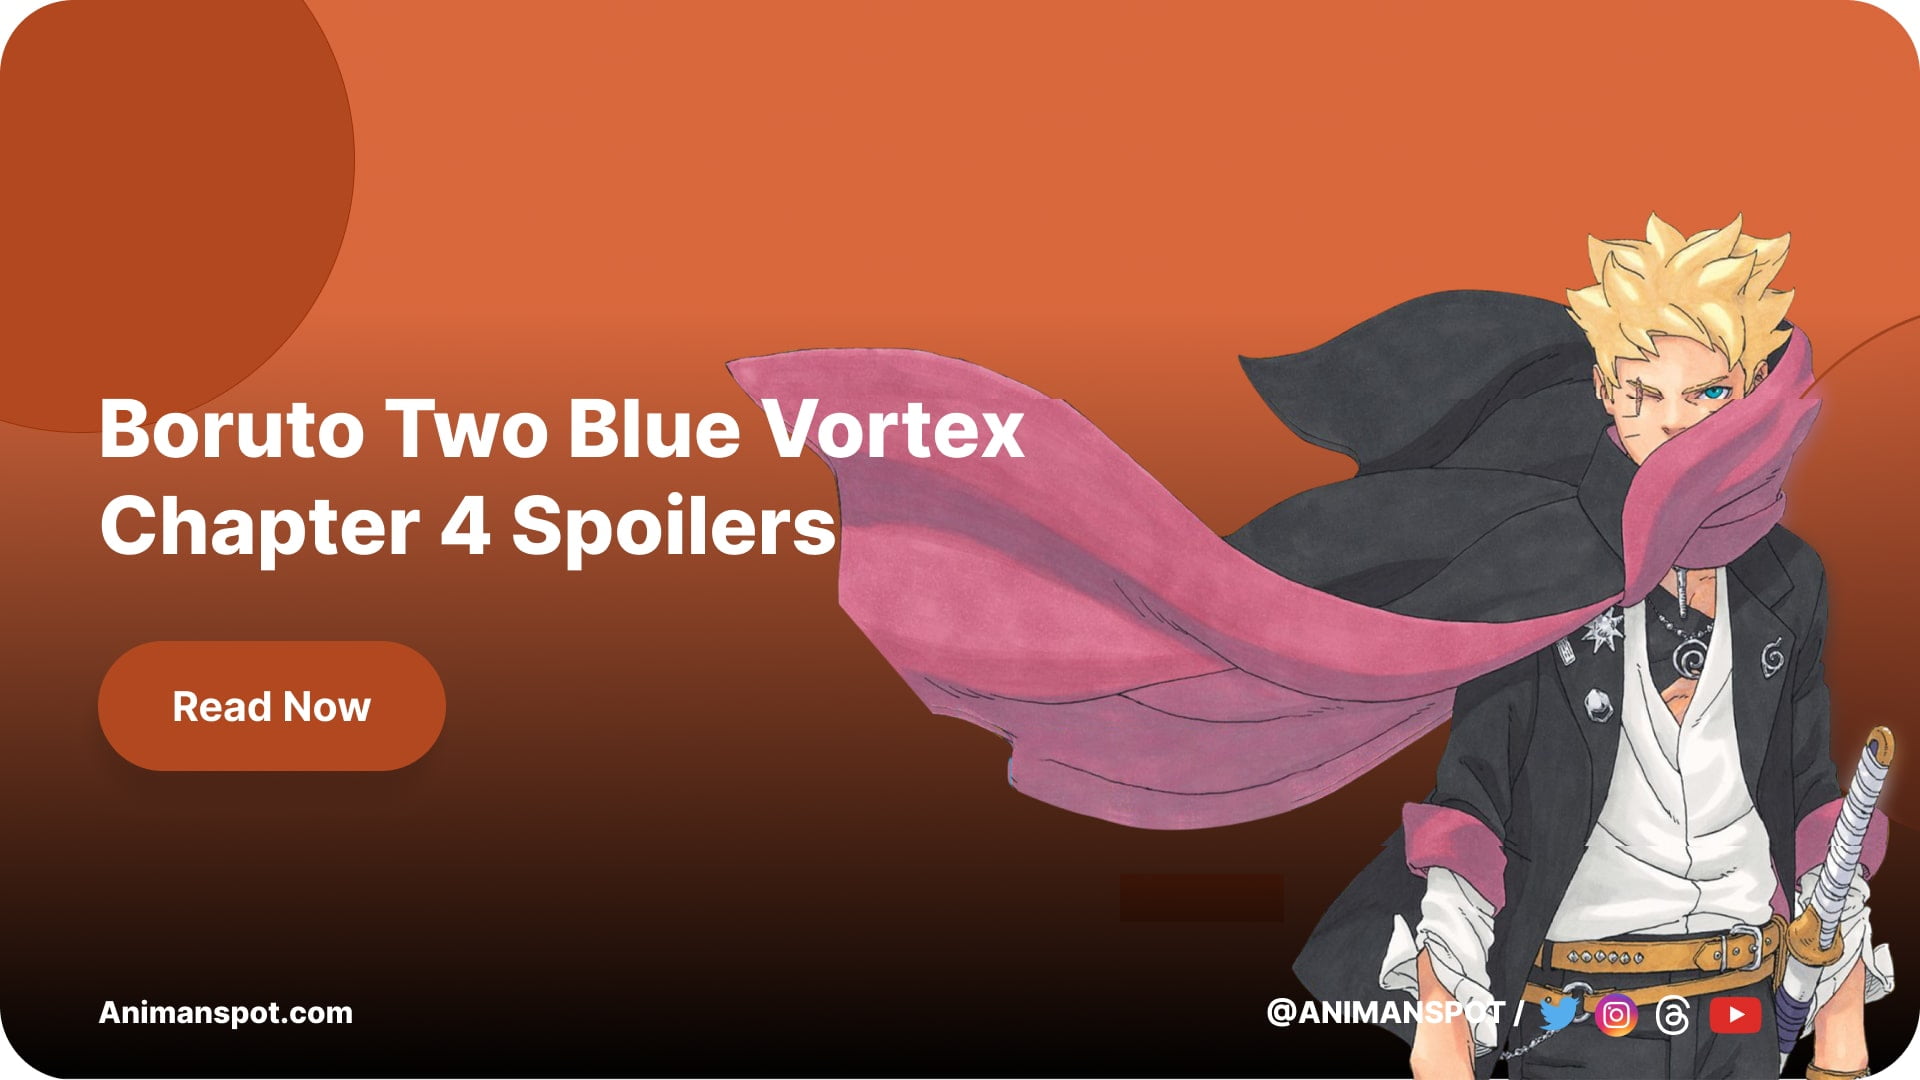 Boruto Two Blue Vortex Chapter 4 Spoilers: Four New Villians?